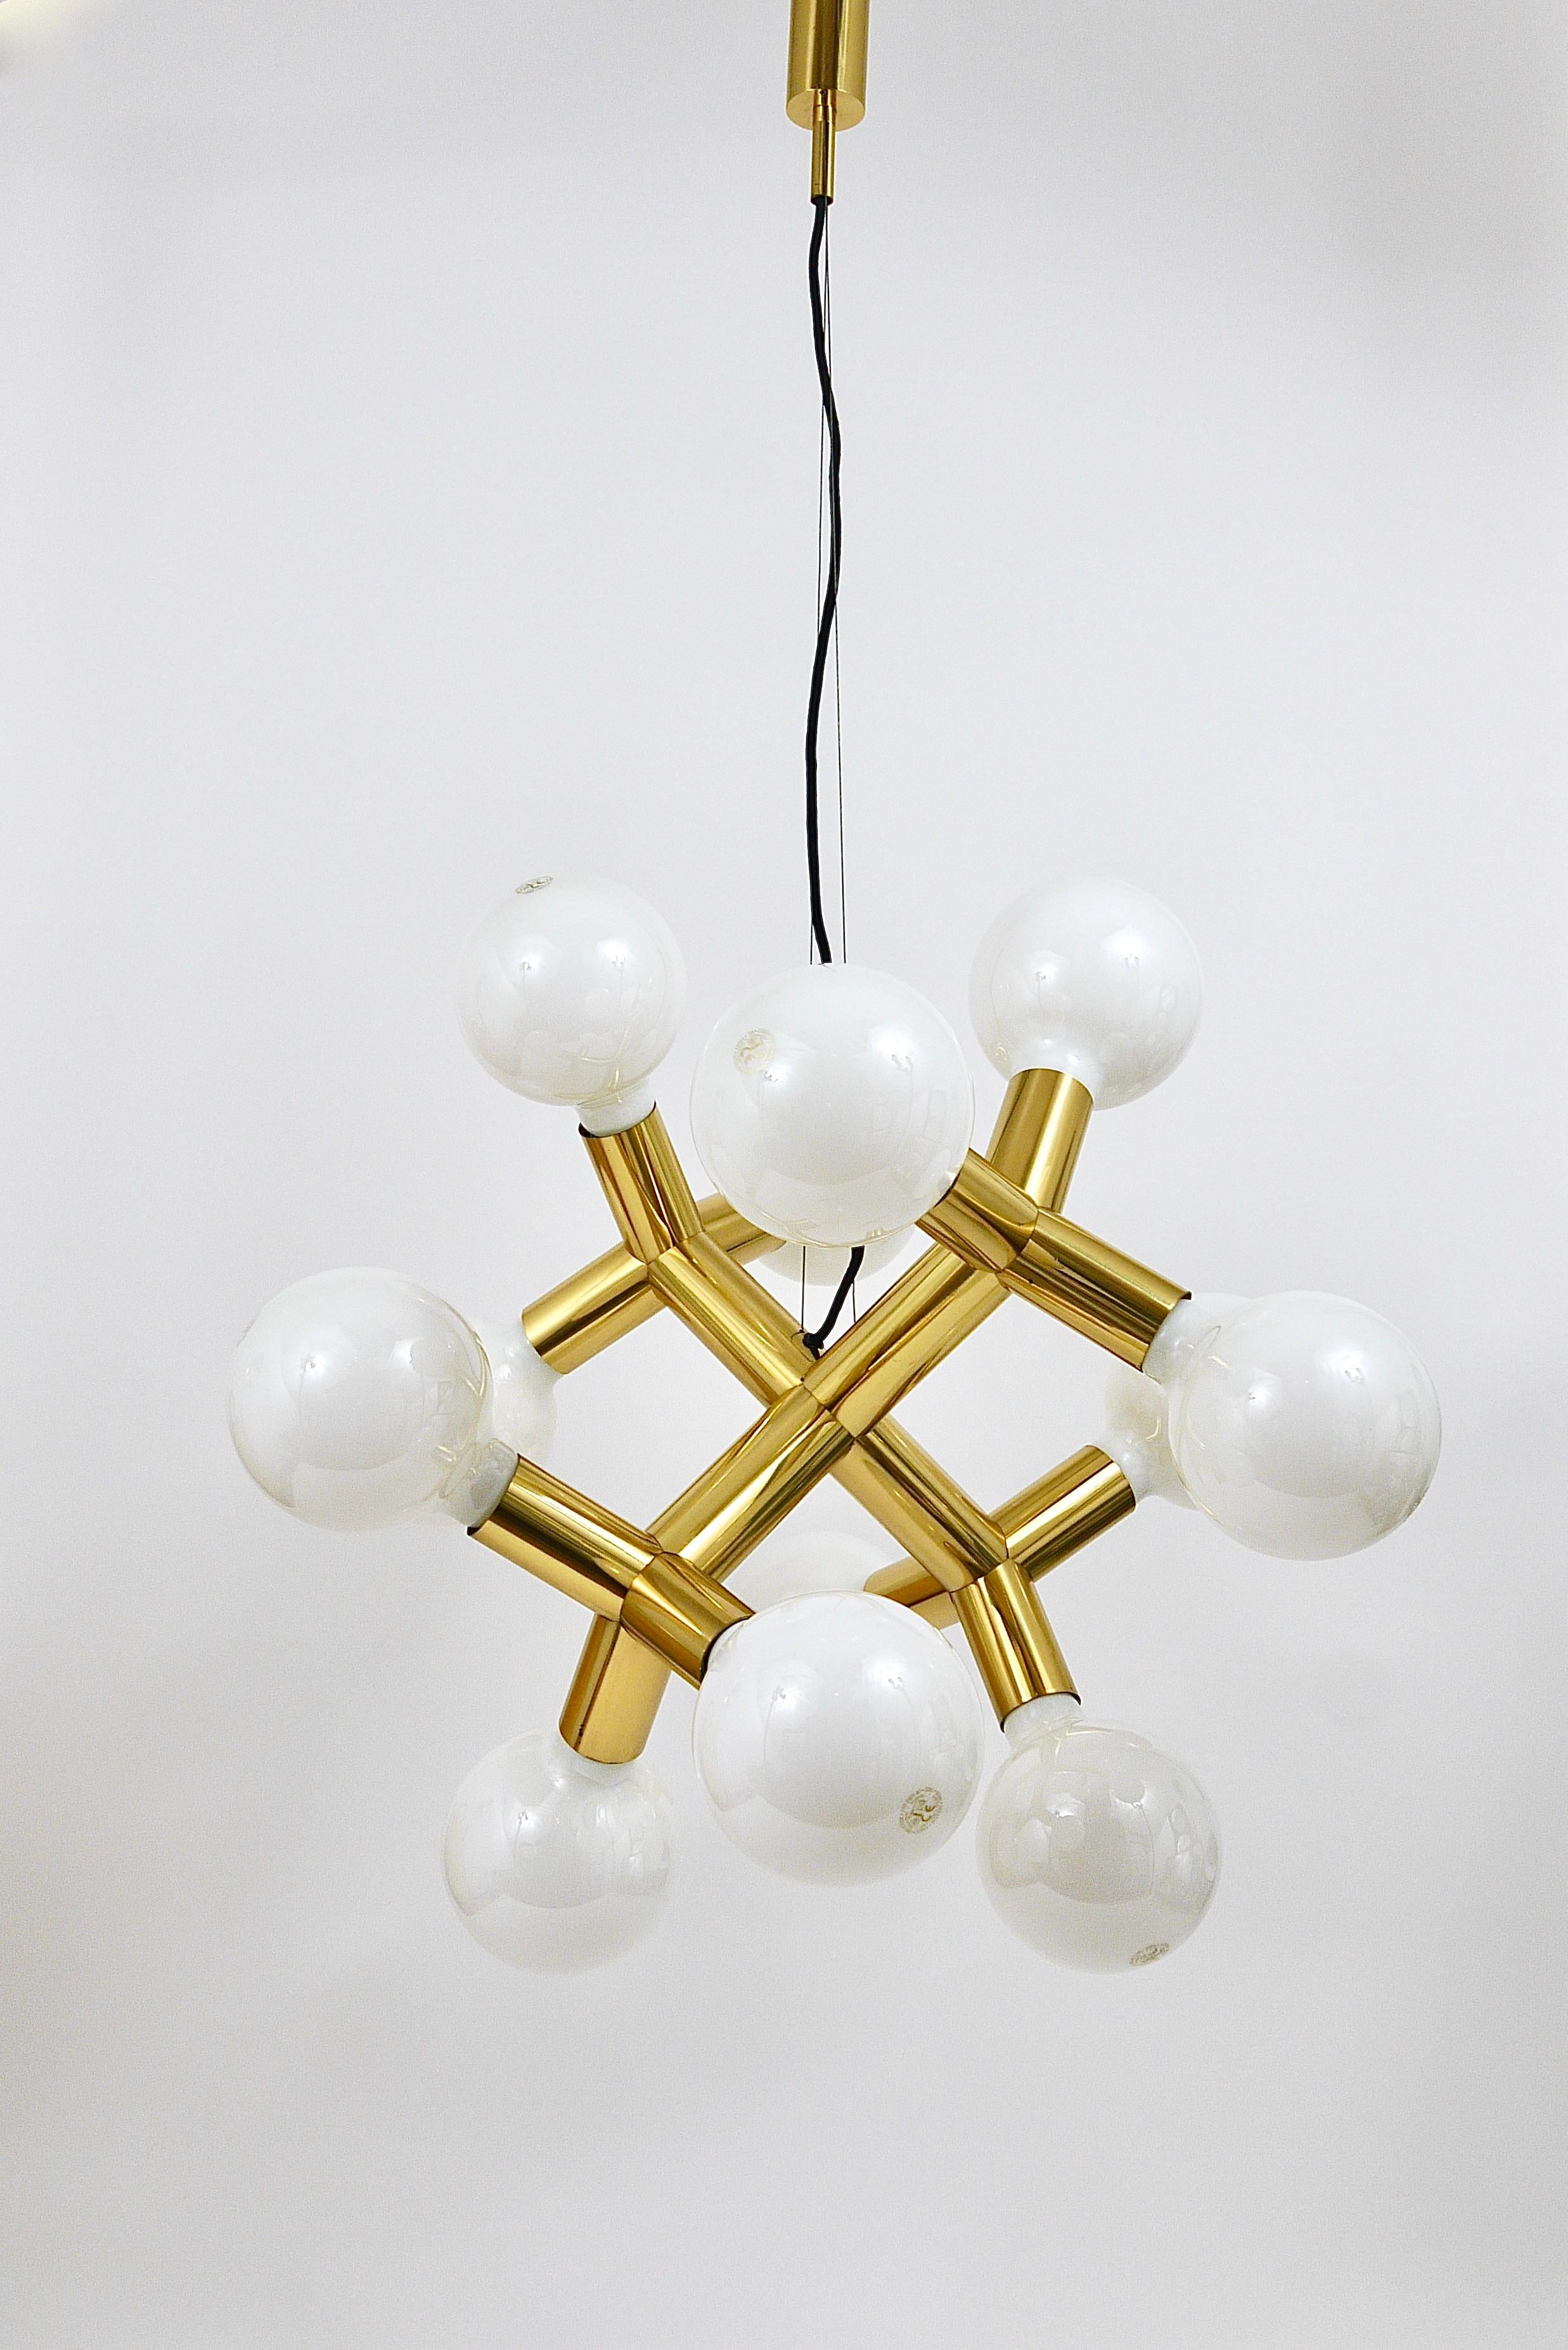 J. T. Kalmar Atomic Sputnik Chandelier, Space-Age Ceiling Lamp, Brass, 1960s For Sale 3